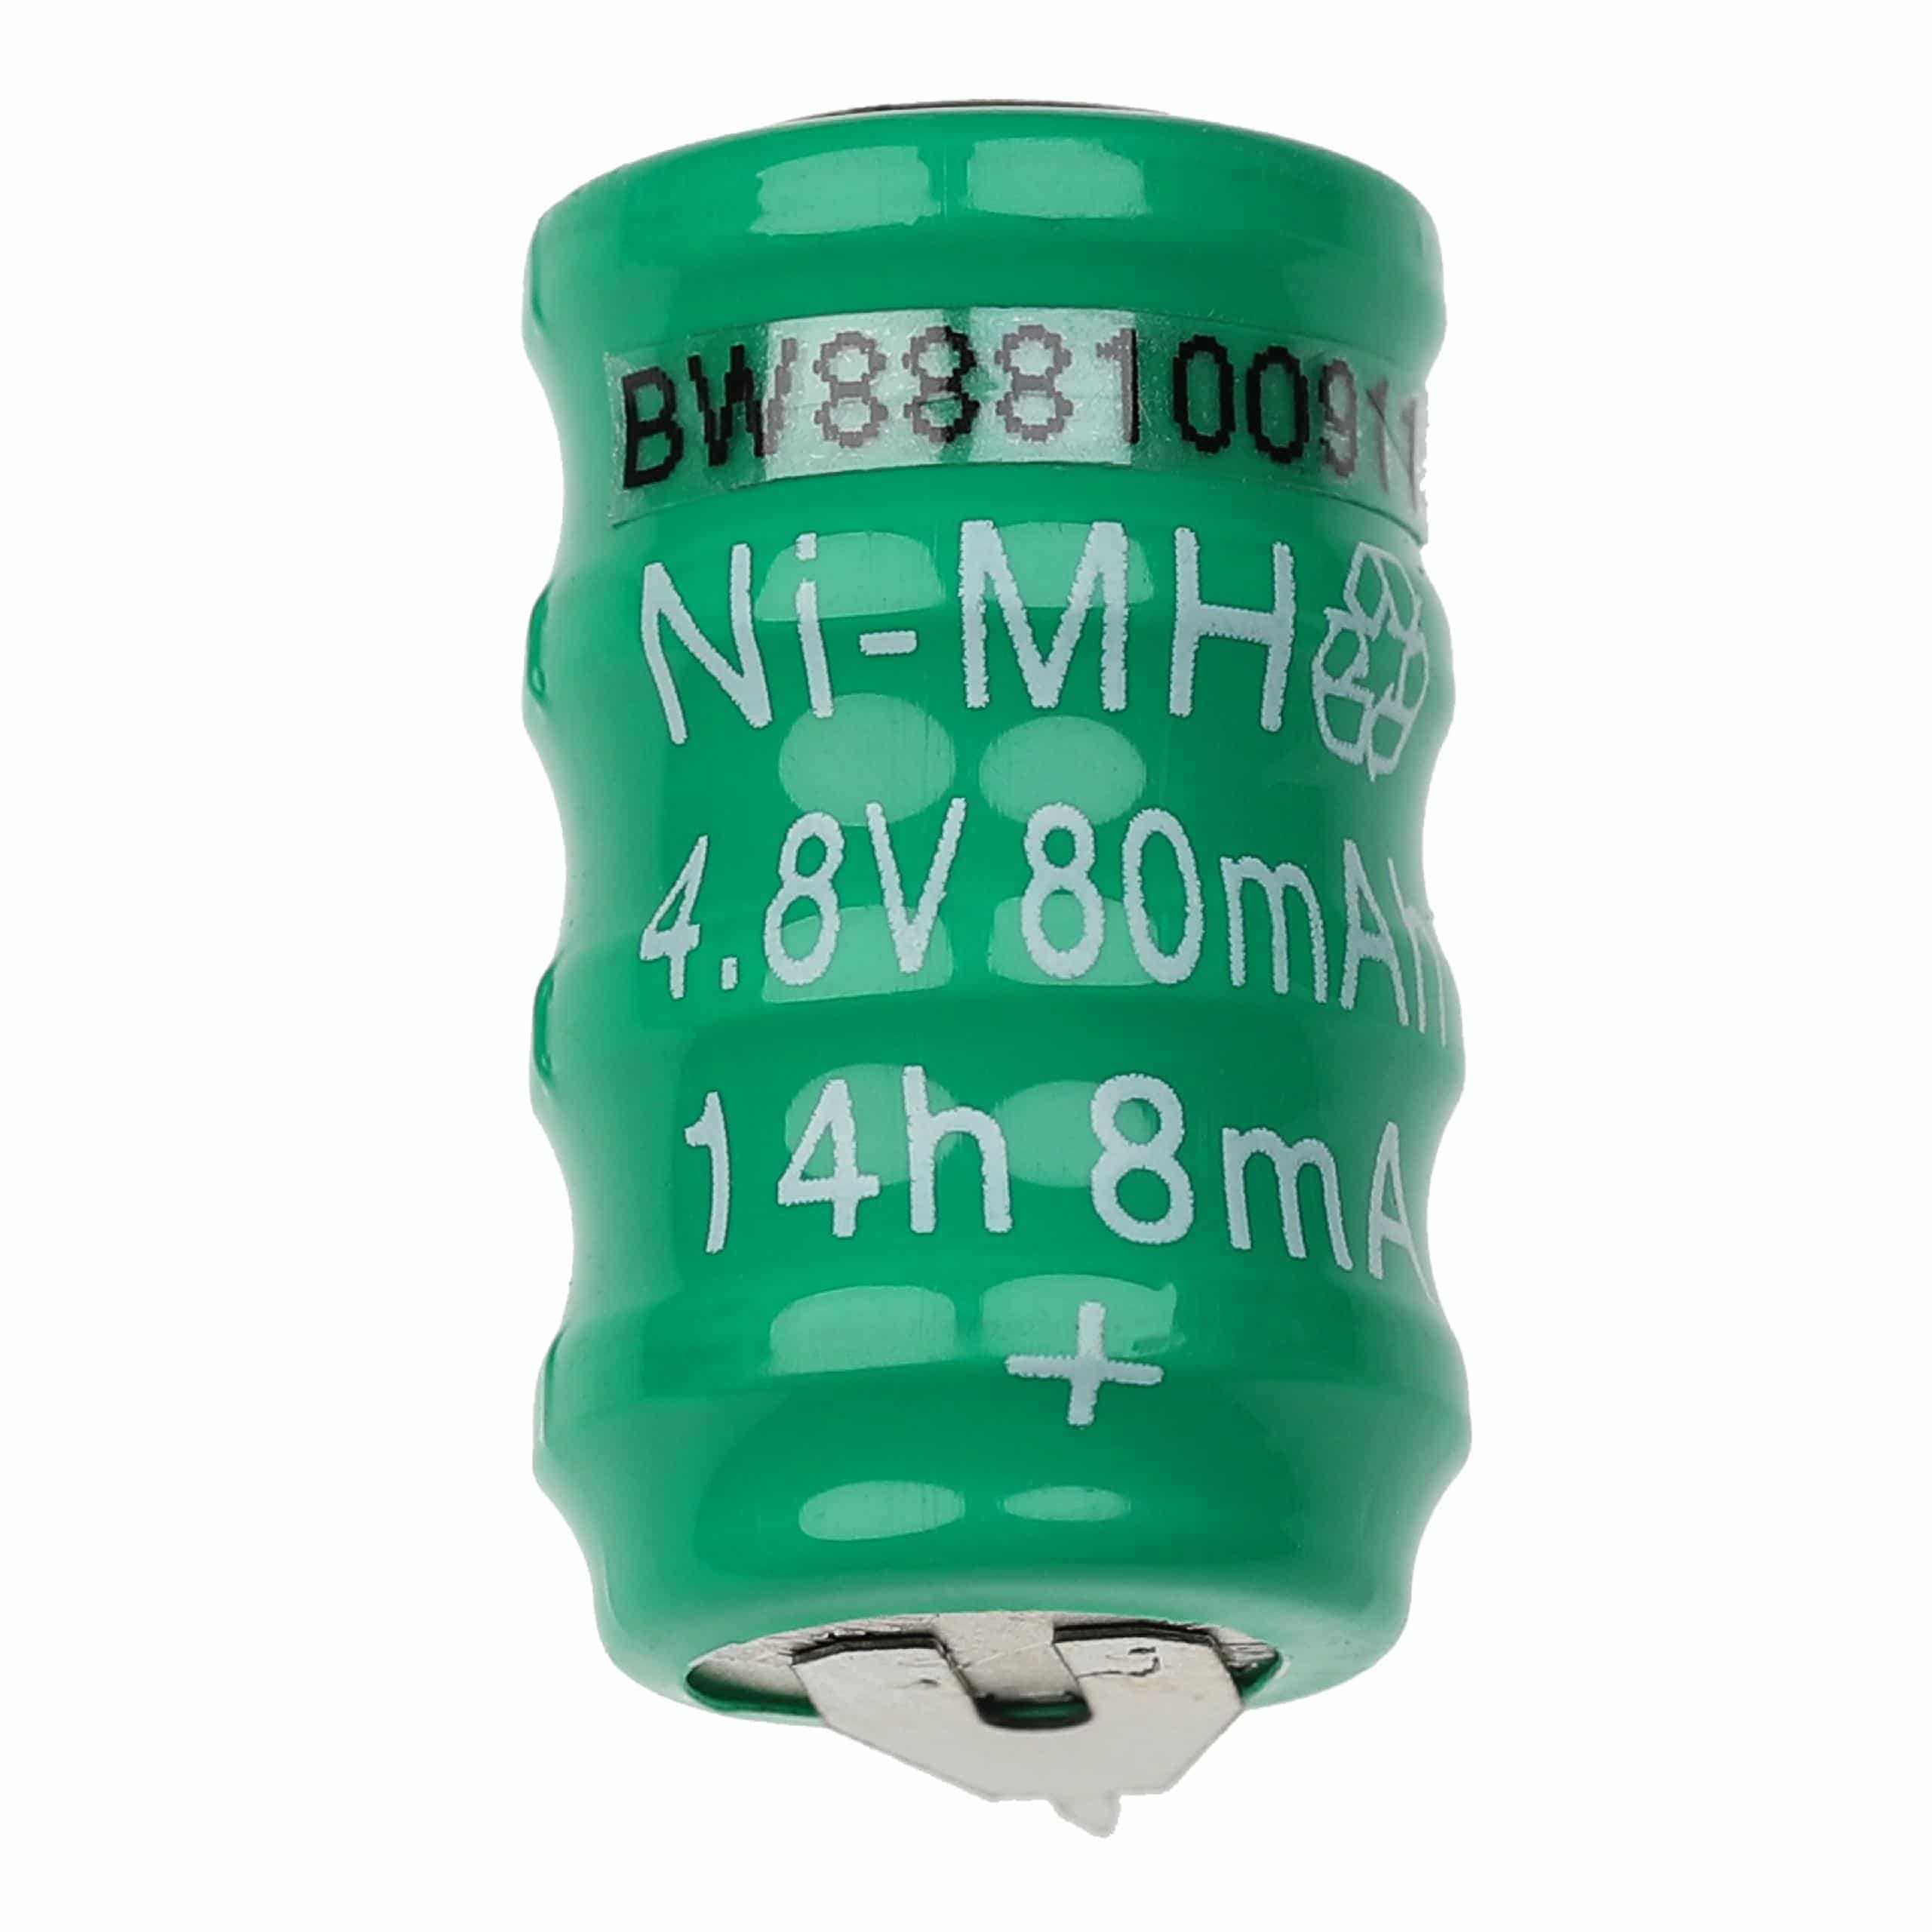 Akumulator guzikowy (4x ogniwo) typ 2 pin do modeli, lamp solarnych itp. zamiennik - 80 mAh 4,8 V NiMH